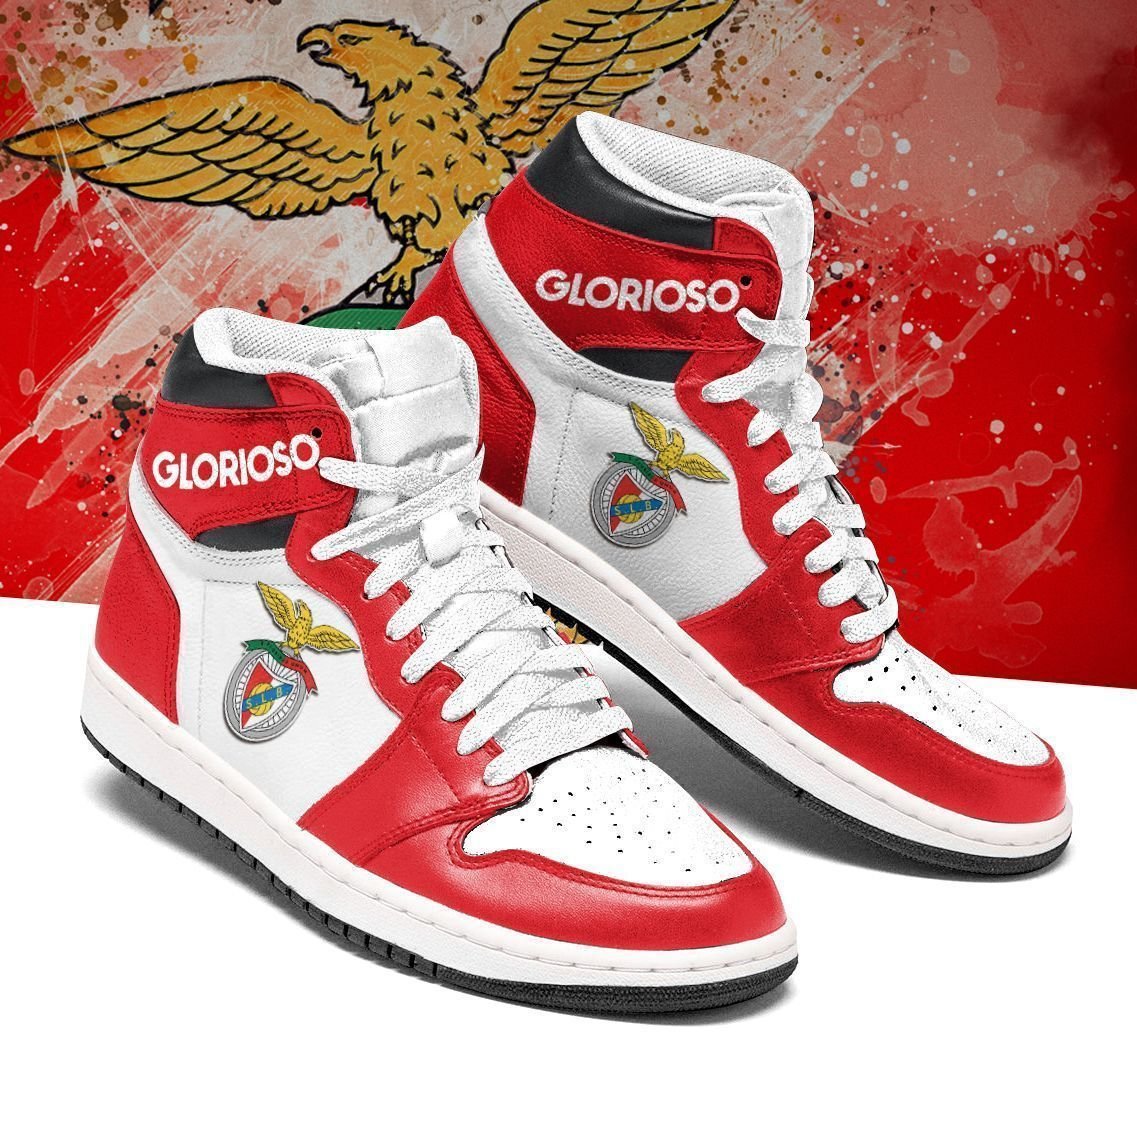 Benfica Glorioso Air Jordan high top shoes 2